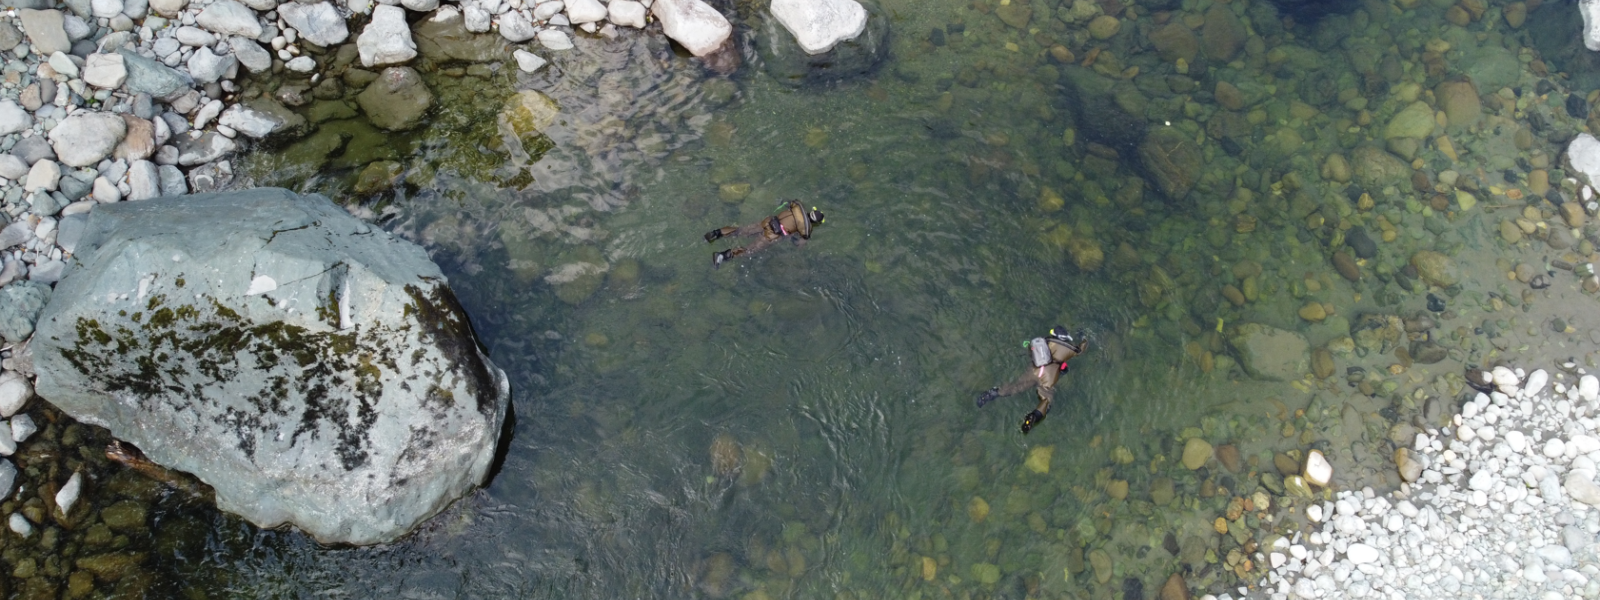 Biologists snorkel to survey for Stillaguamish River steelhead and salmon.